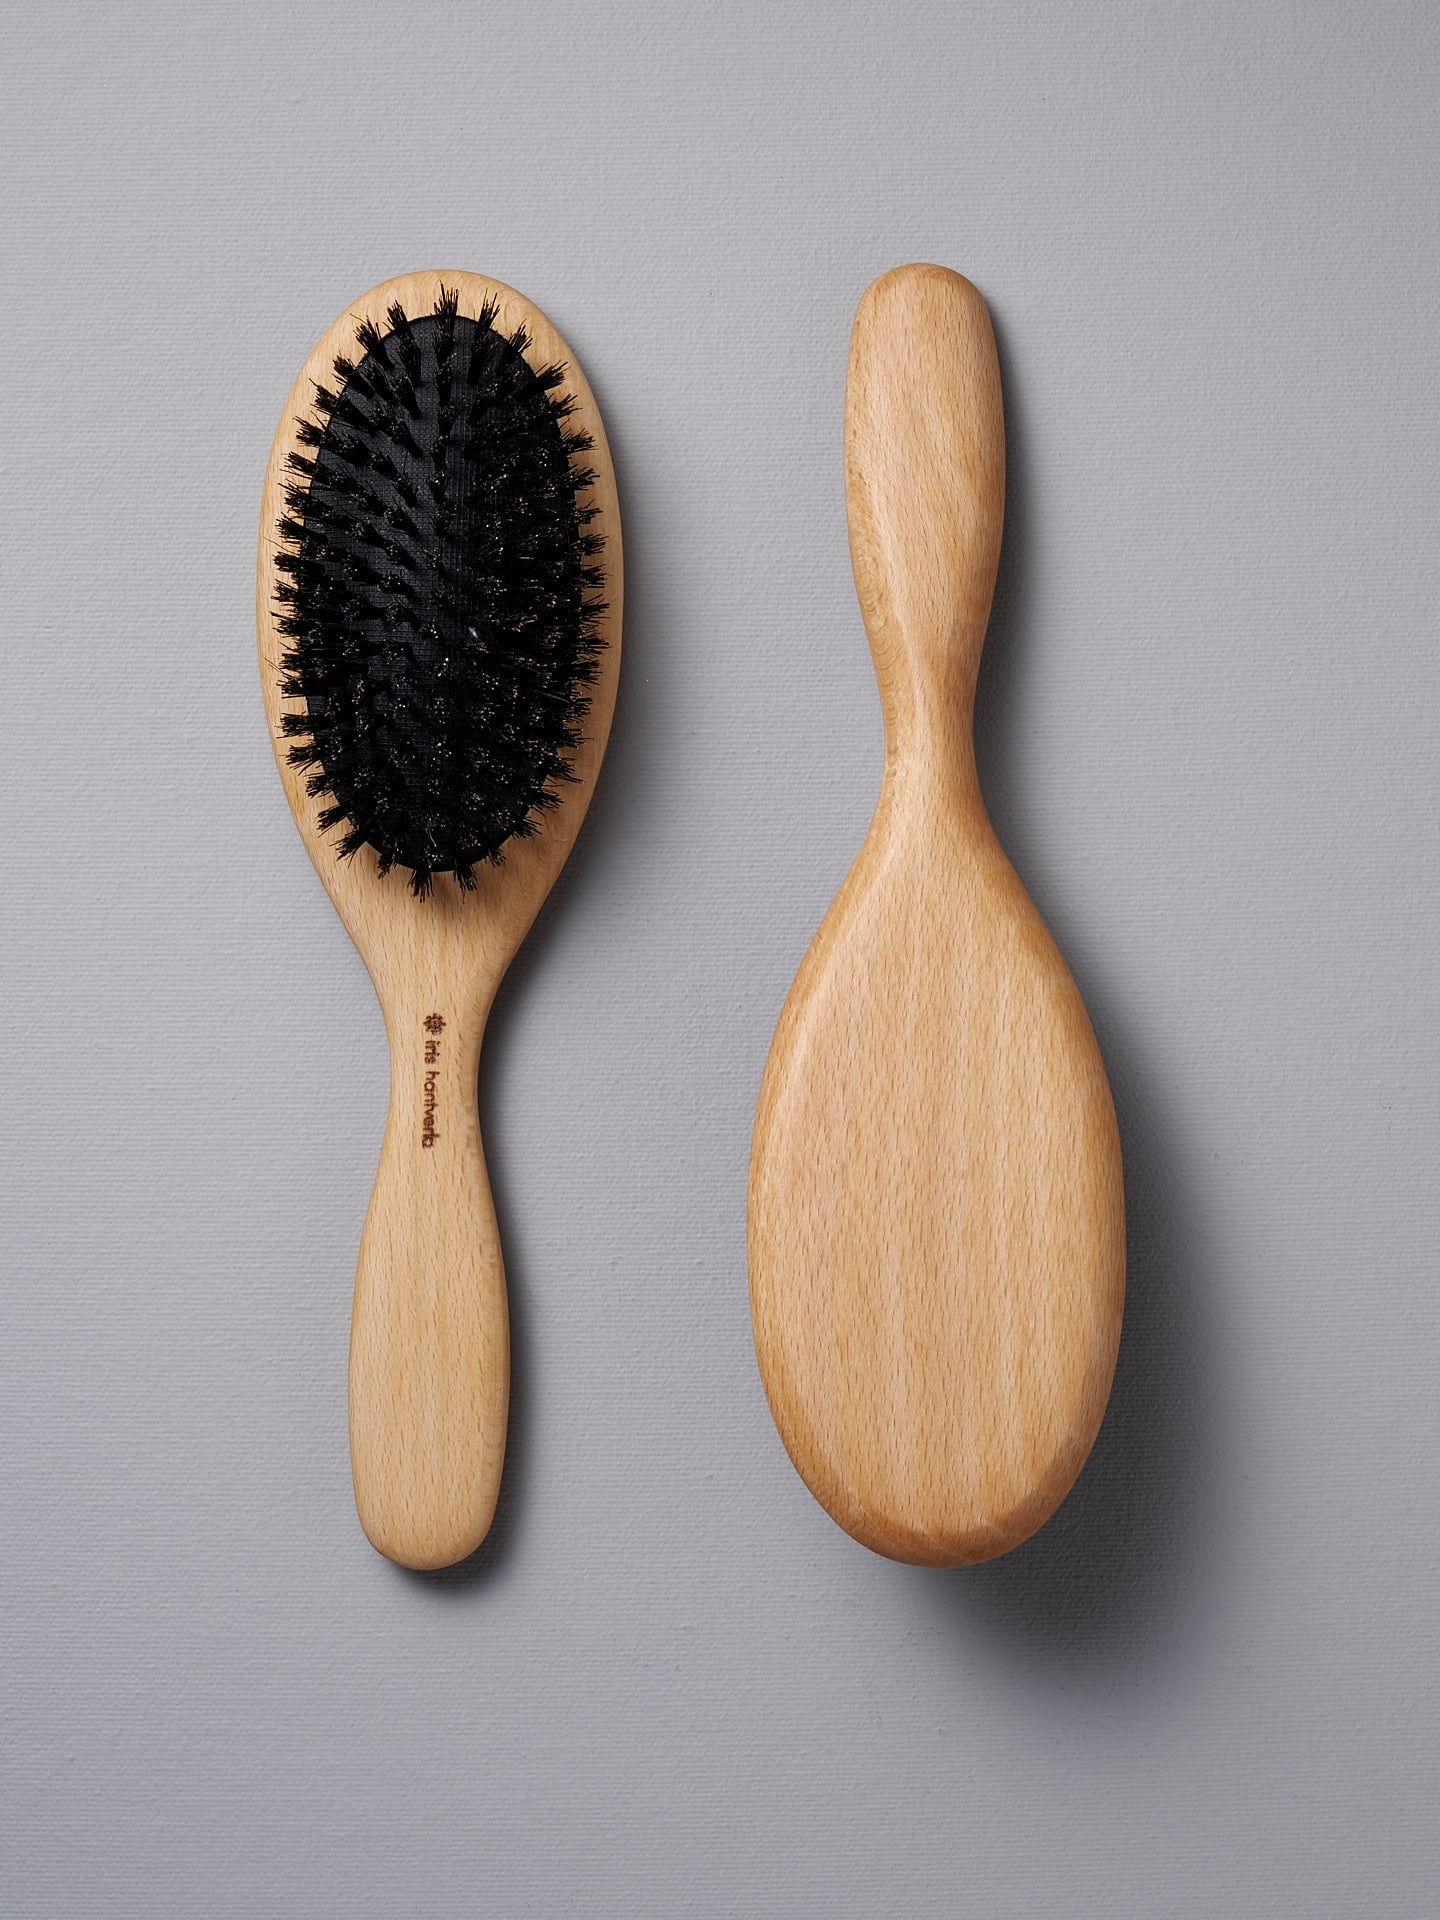 An Oval Hair Brush – Beechwood & Boar Bristles by Iris Hantverk.